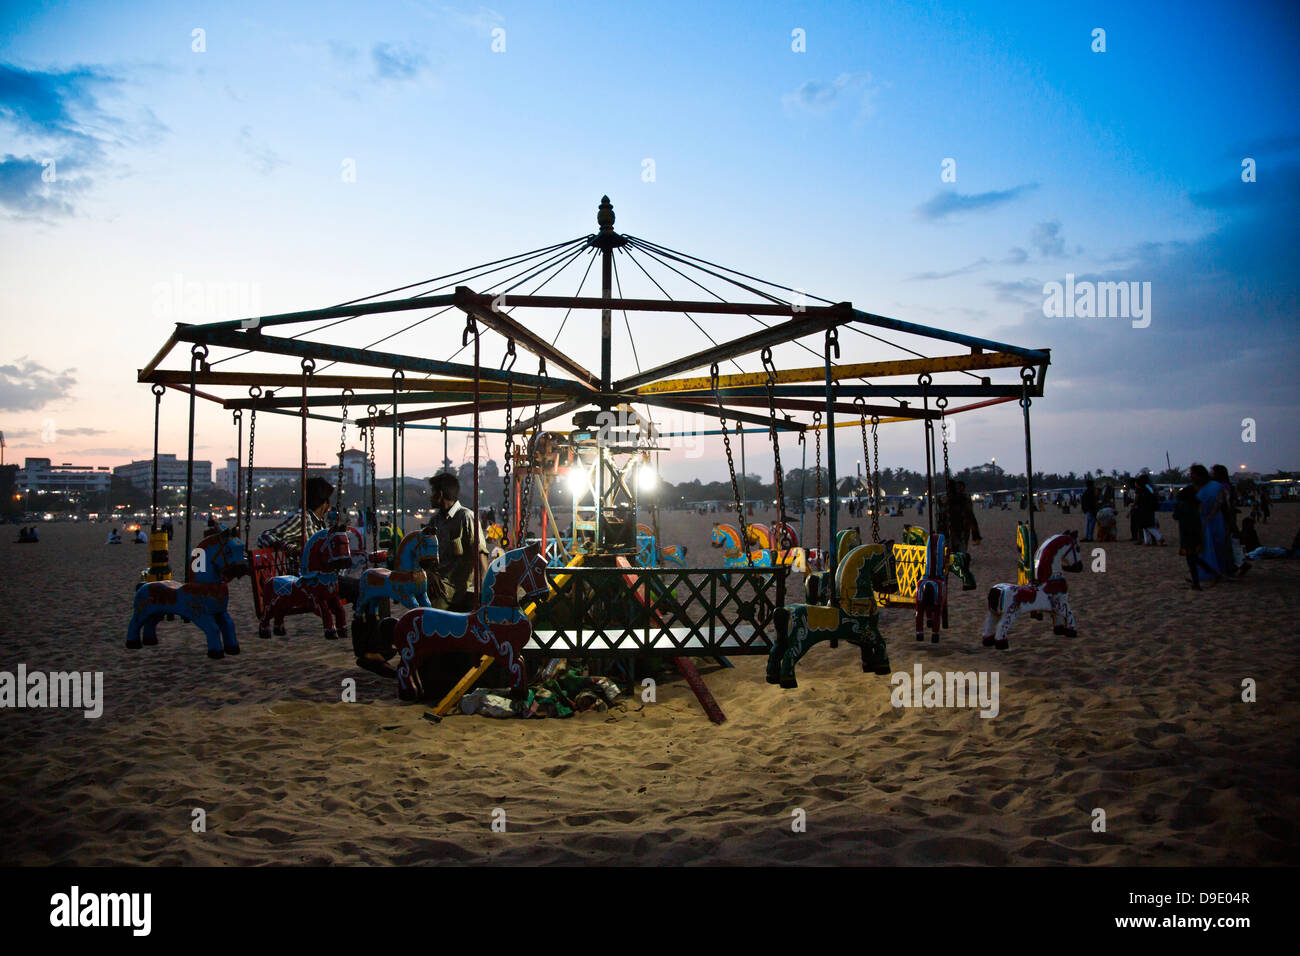 Carousel on the beach, Chennai, Tamil Nadu, India Stock Photo